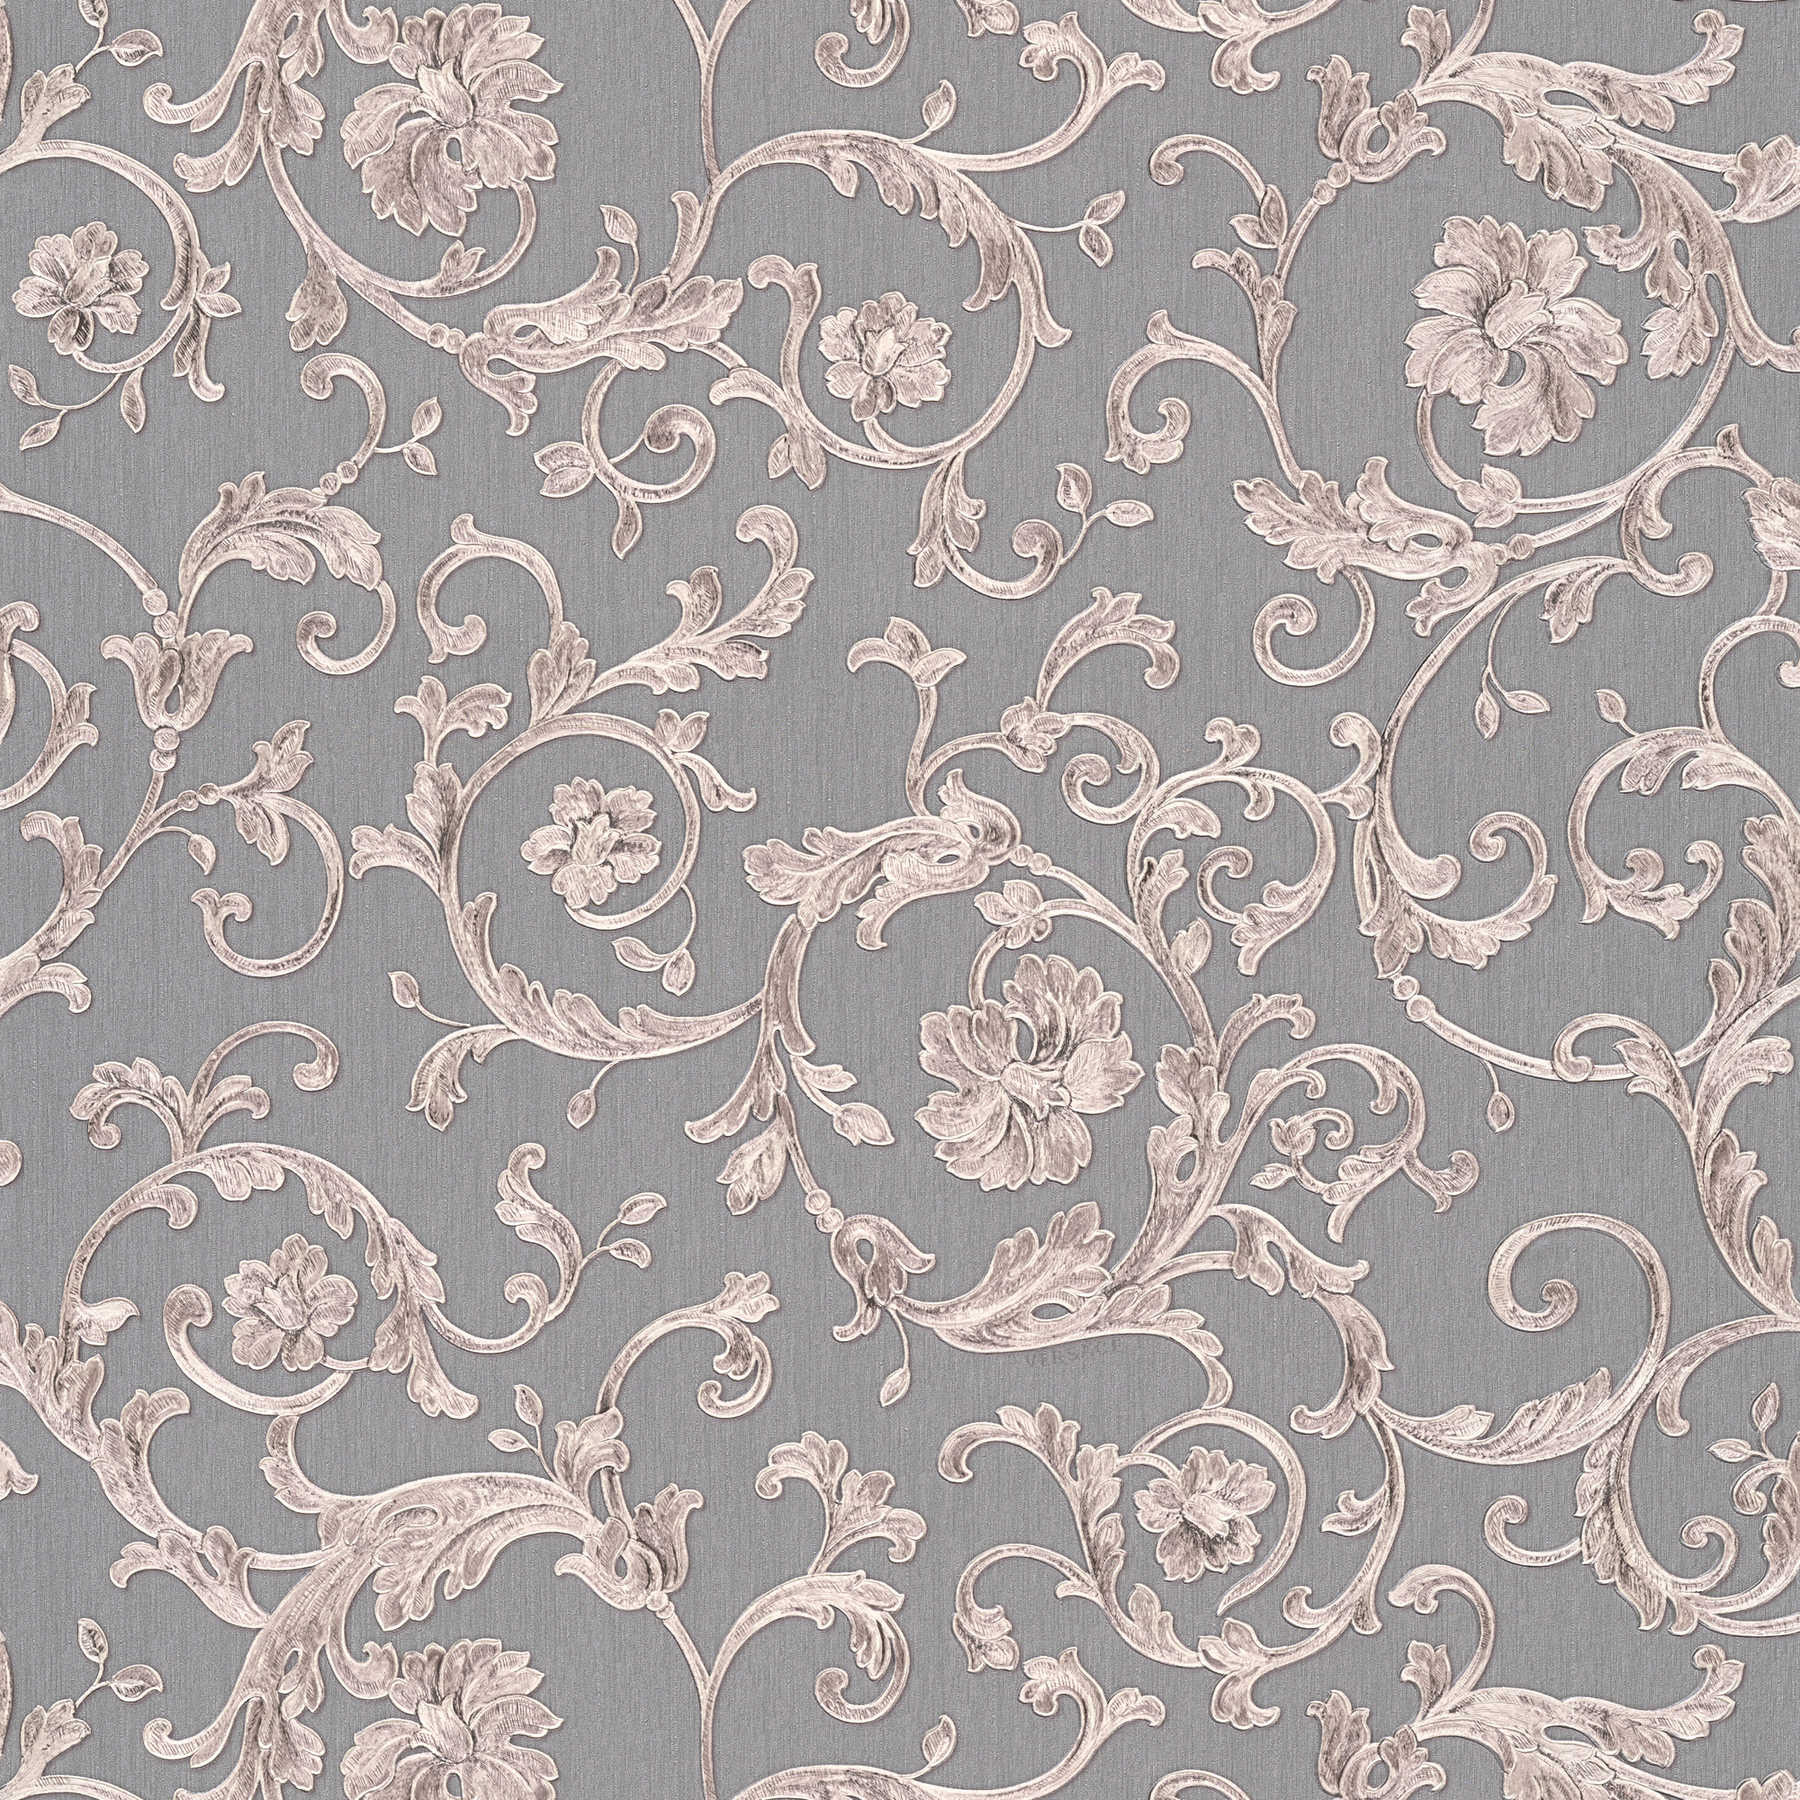 VERSACE wallpaper with ornamental pattern - grey, metallic
